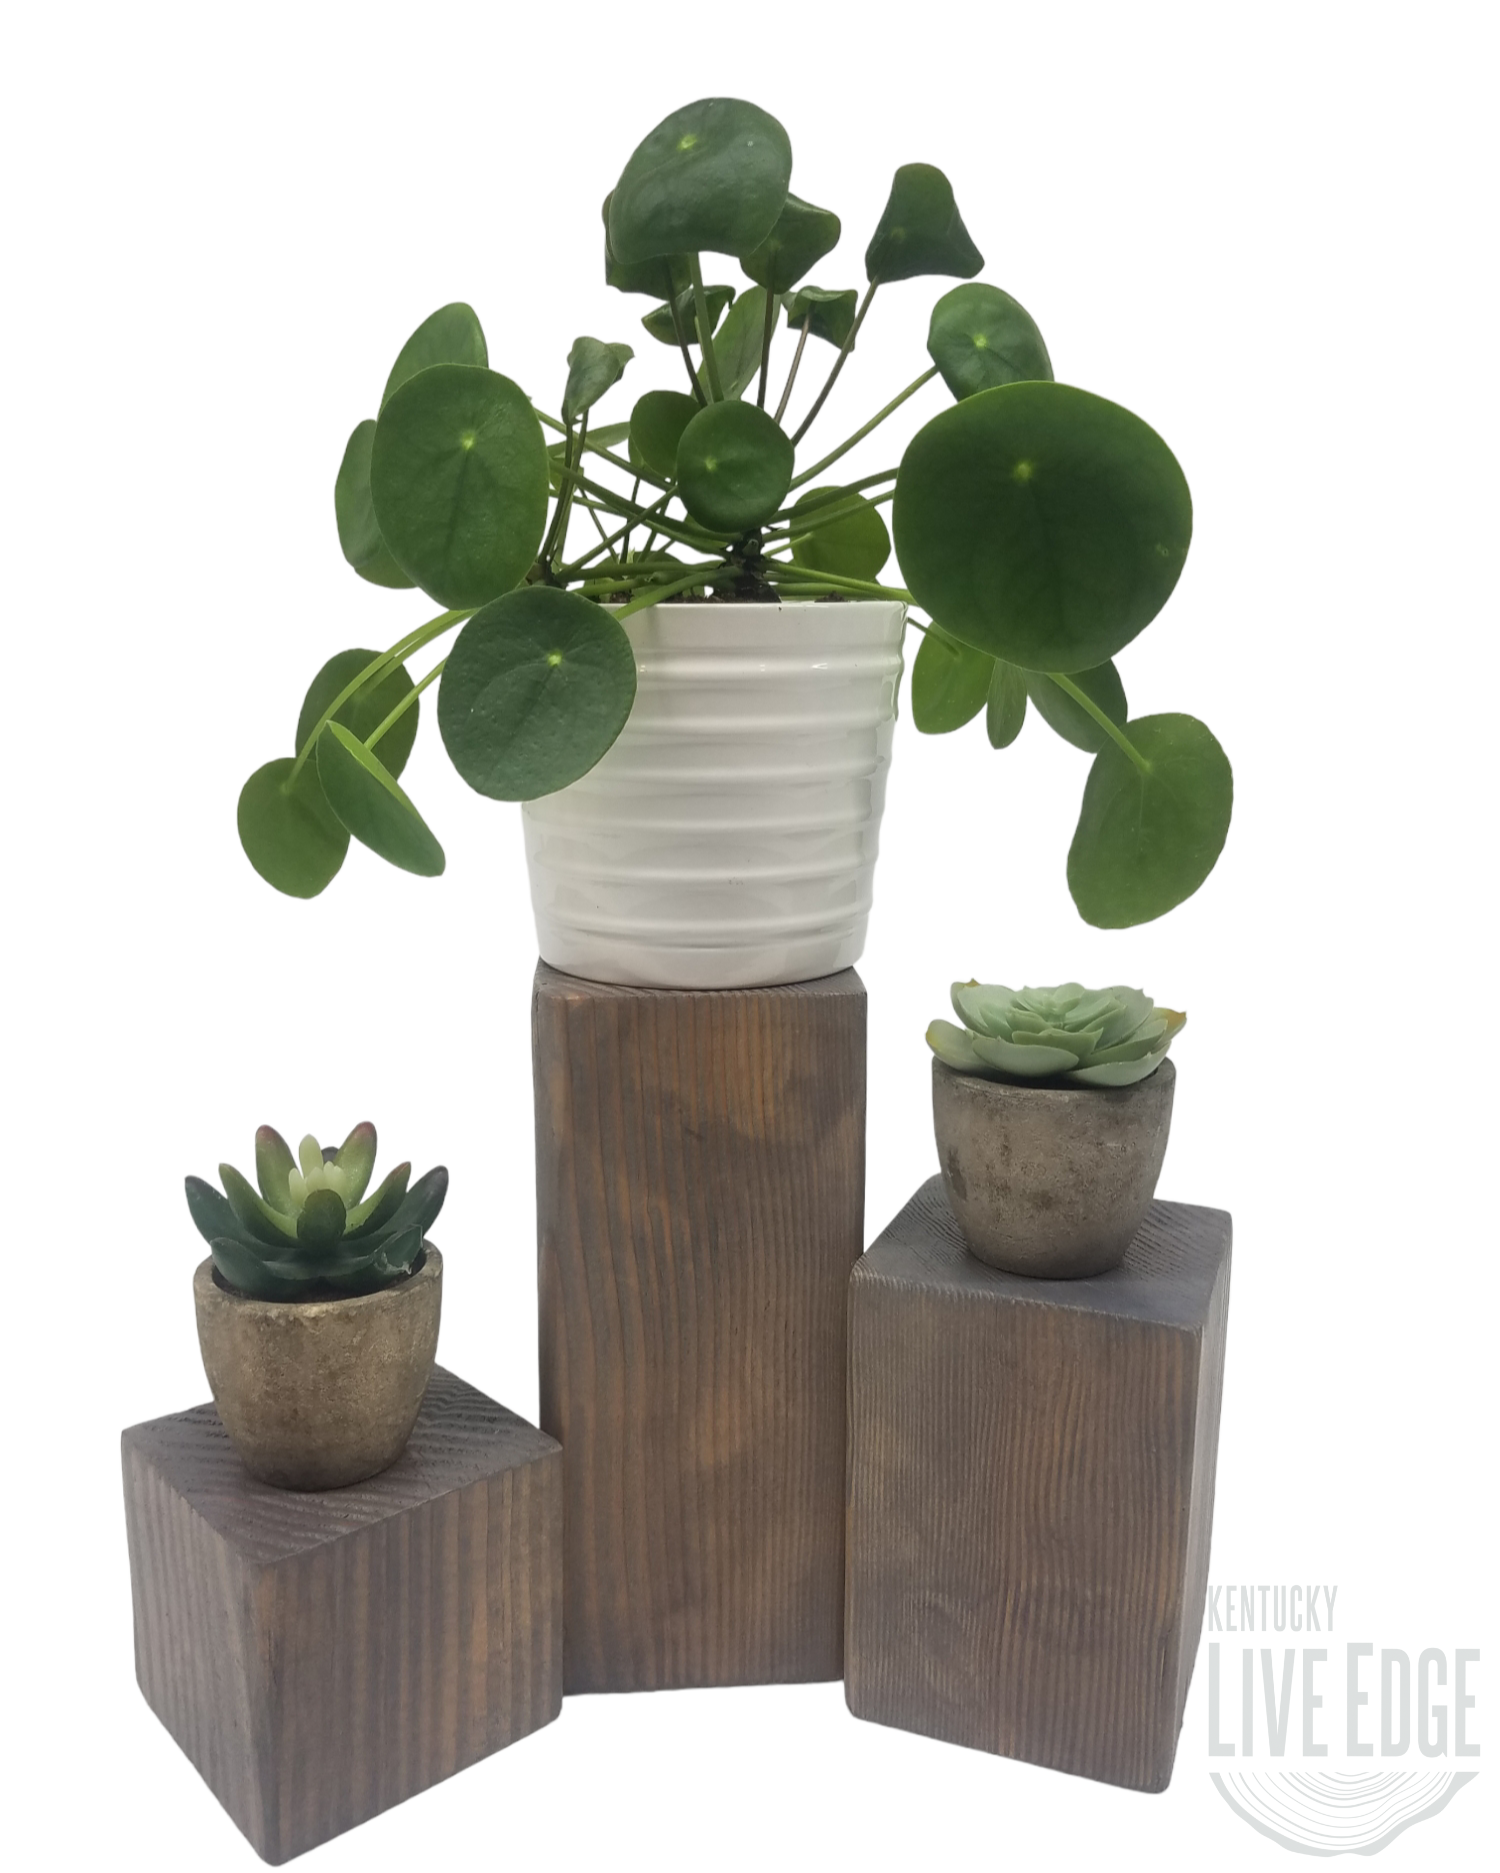 Wood Block Risers- Decor Risers- Black- Walnut- Whitewash- Gray- Plant Risers- Set of 3- Solid Wooden Blocks-Photo Displays- Rustic- Modern